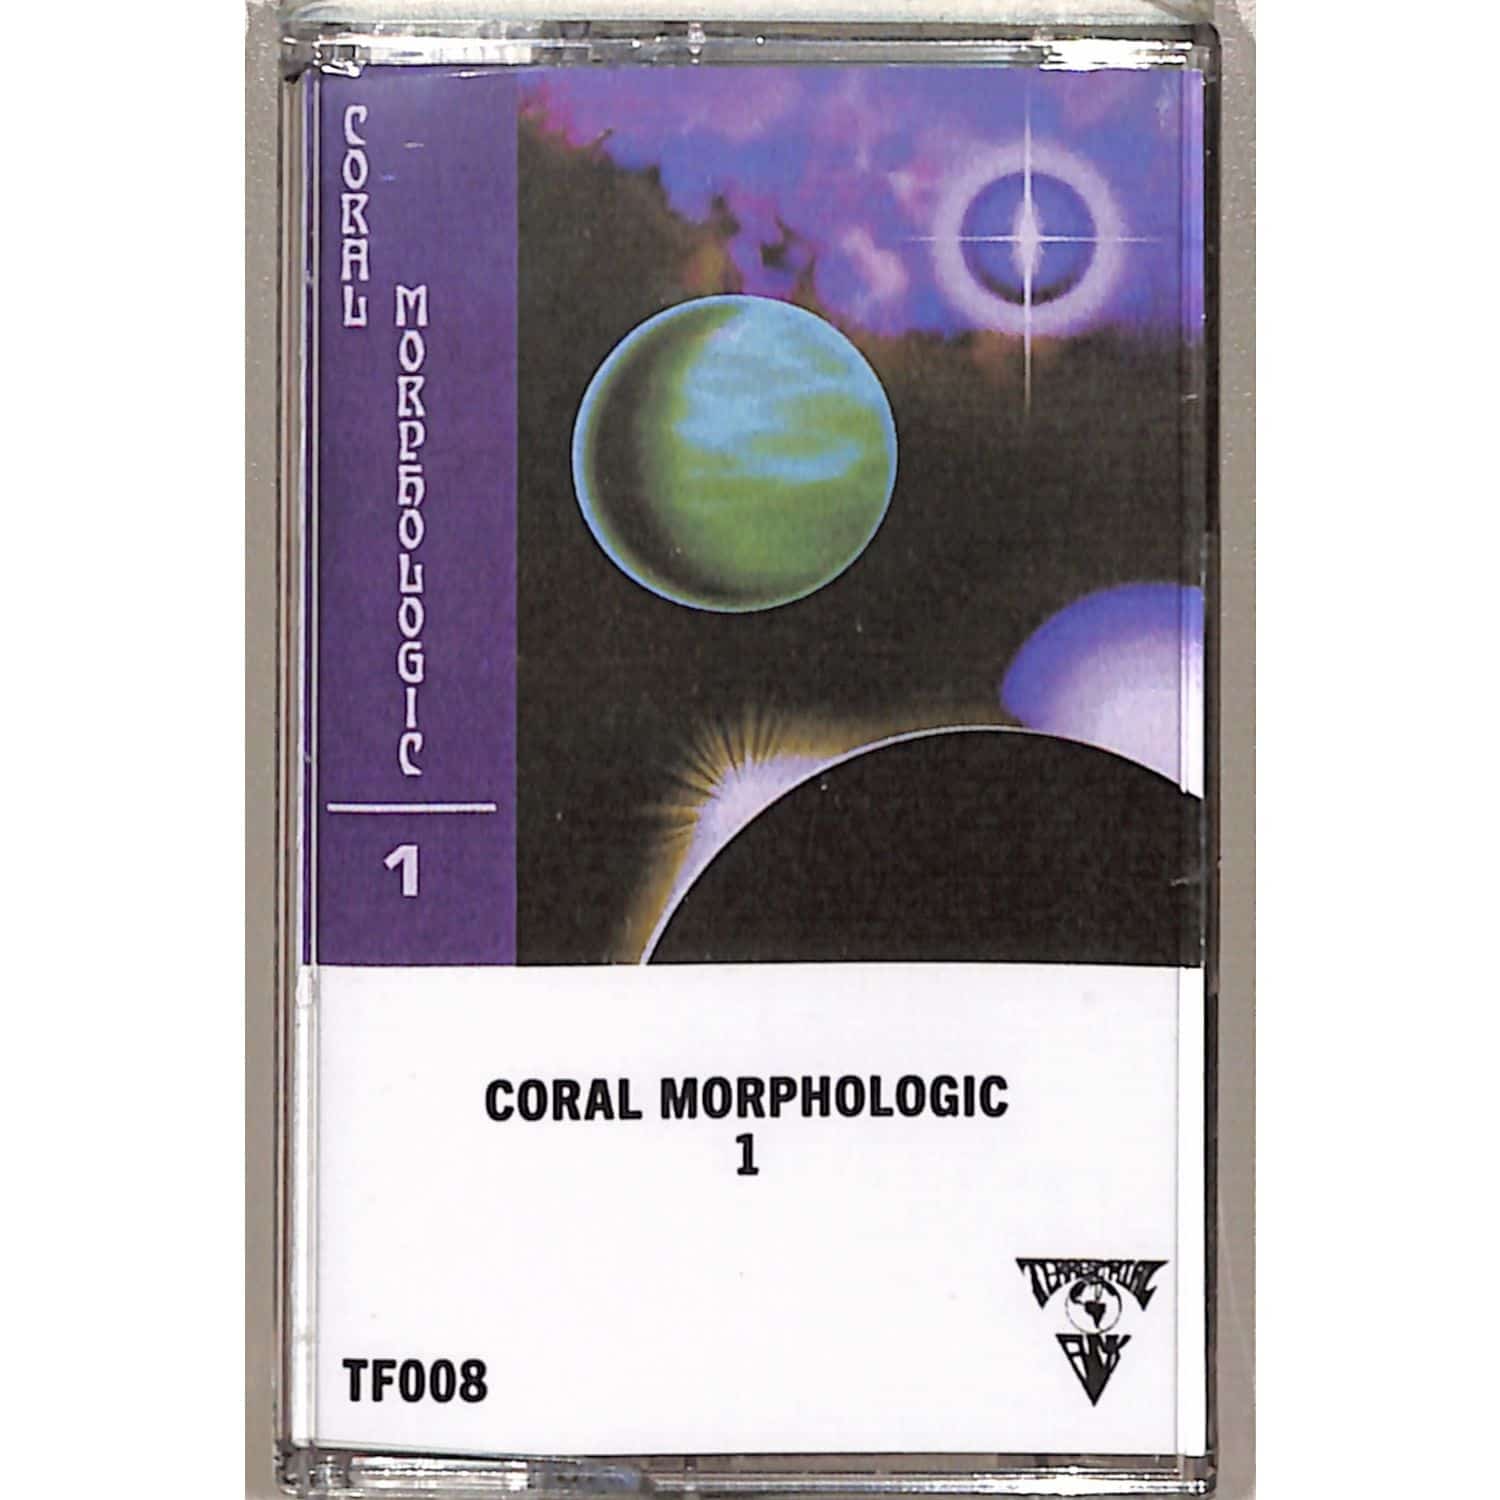 Coral Morphologic - CORAL MORPHOLOGIC 1 